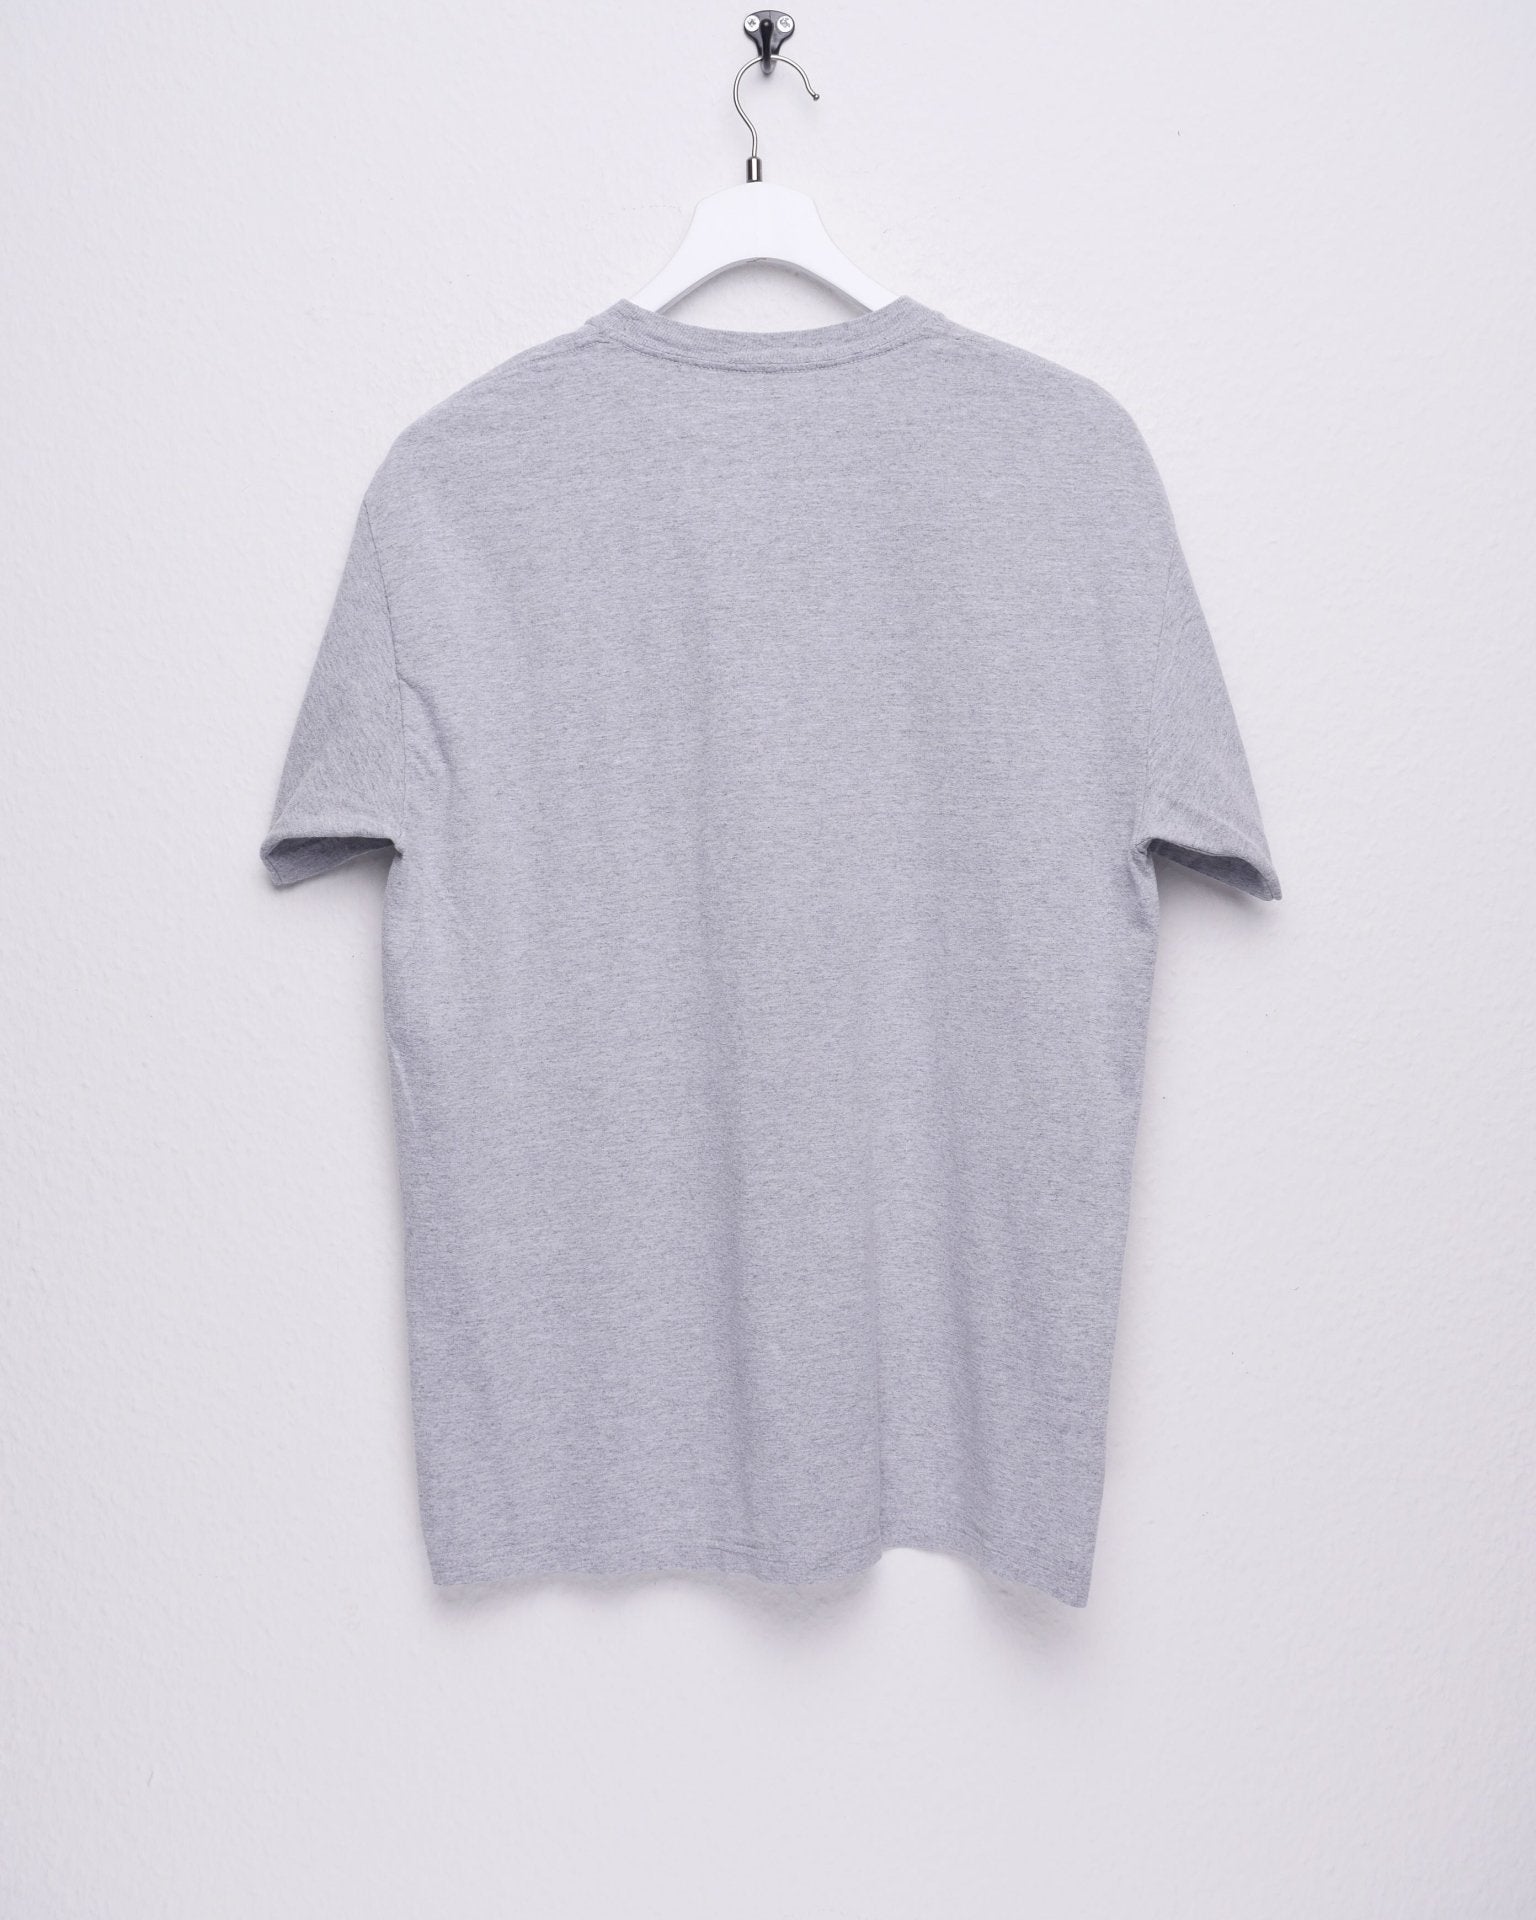 Champion 45 printed Graphic grey Shirt - Peeces